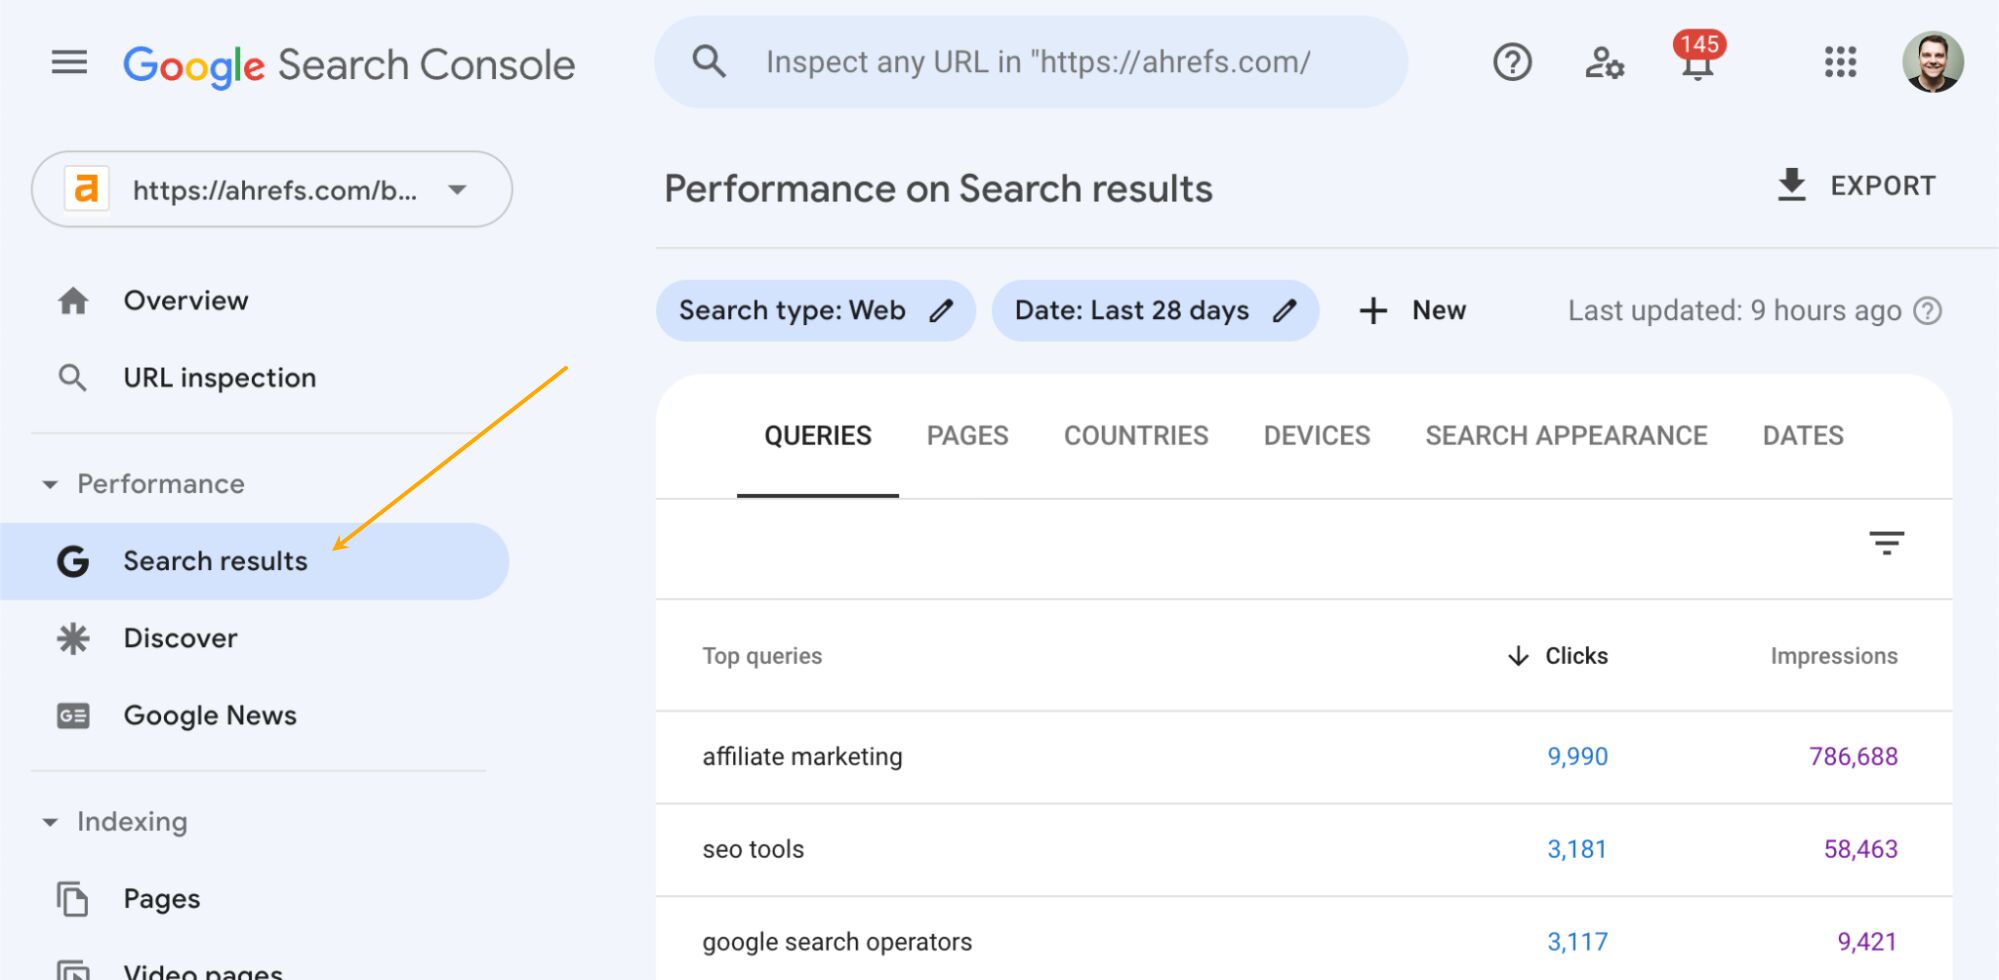 Search results report in Google Search Console